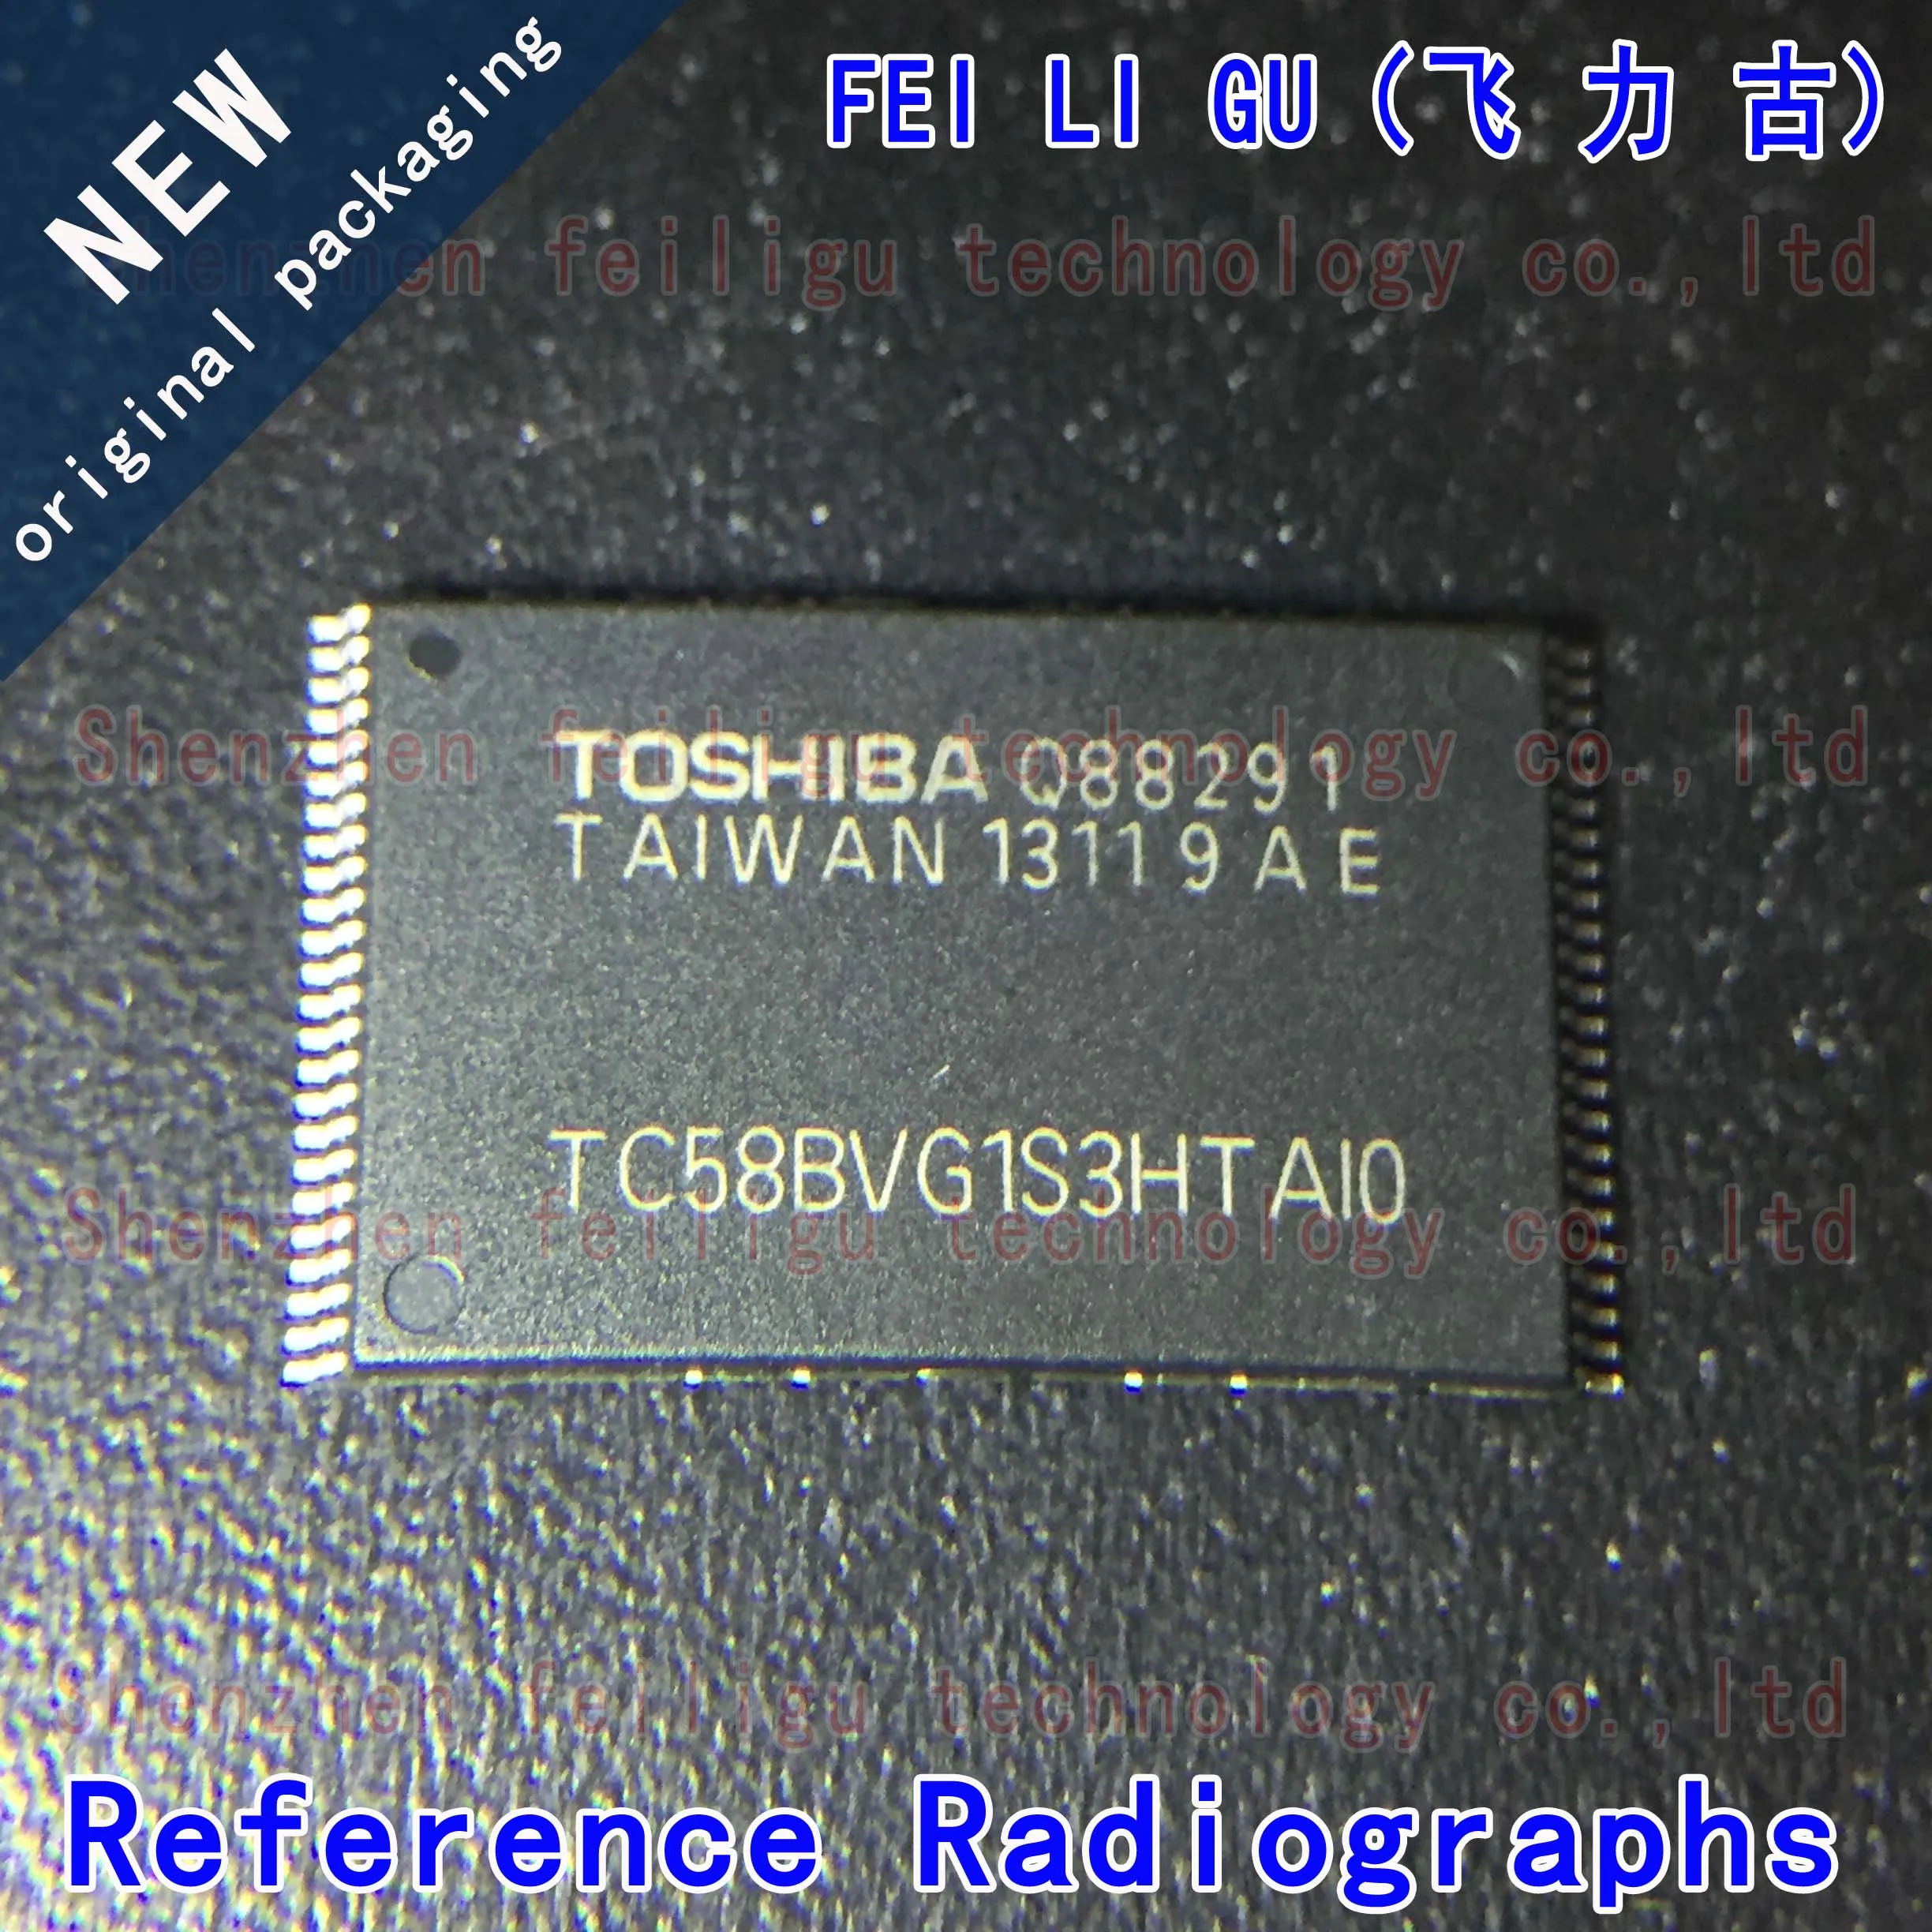 1PCS 100% New Original TC58BVG1S3HTAI0 TC58BVG1S3 Package:TSOP48 FLASH-NAND Memory 2Gb Chip 1pcs 100% new original mt29f8g08abacawp c 29f8g08abaca package tsop48 flash nand 8gb memory chip